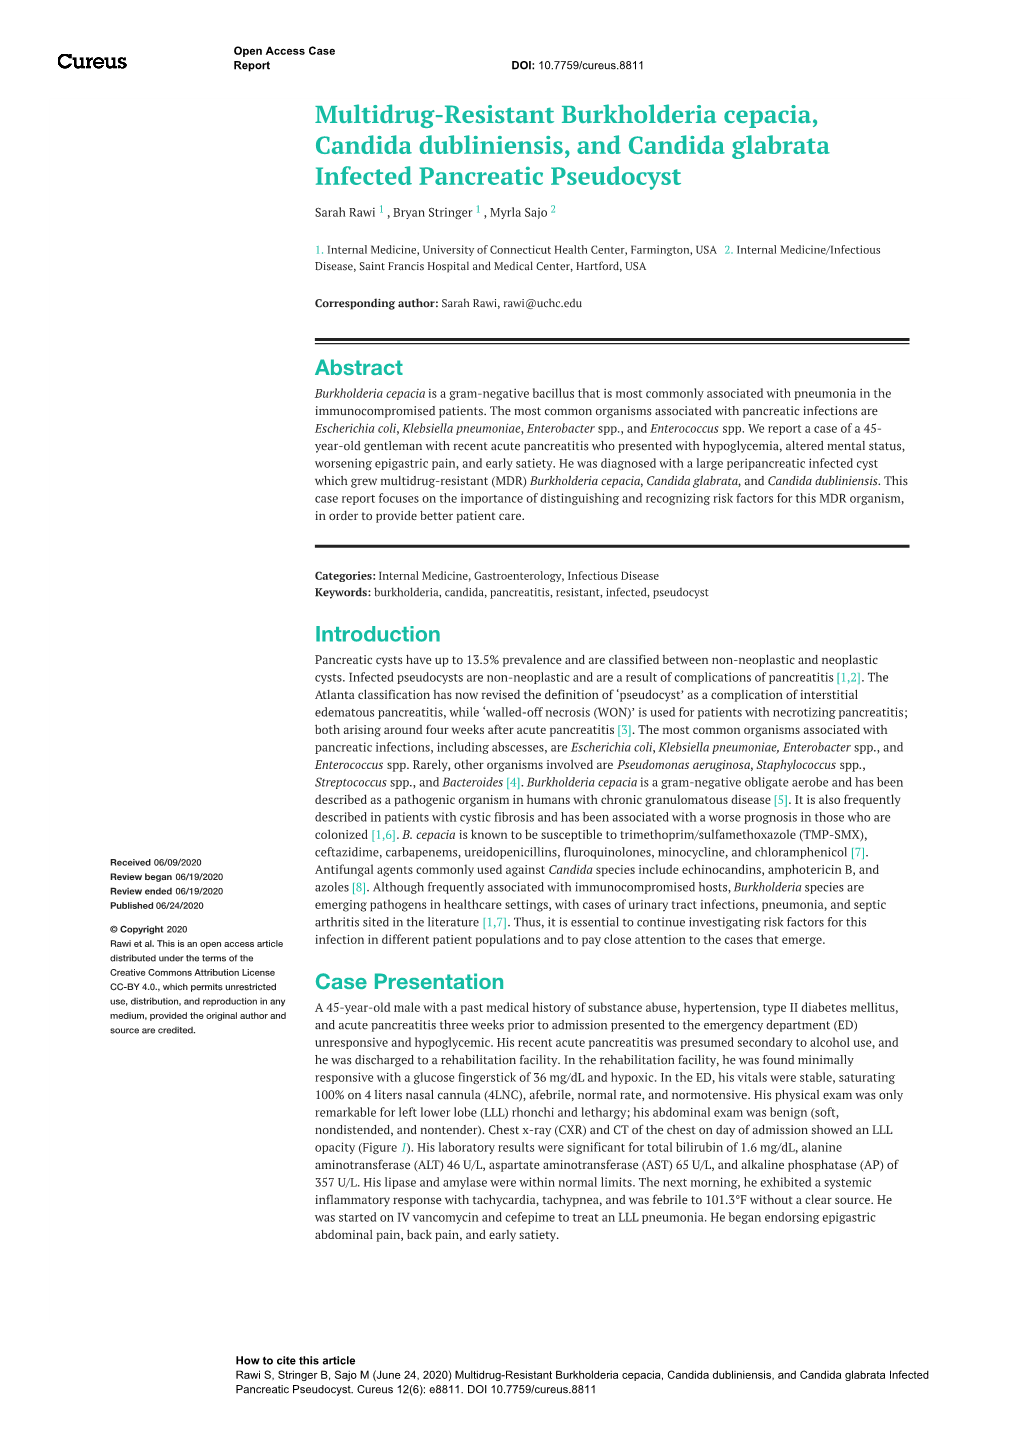 Multidrug-Resistant Burkholderia Cepacia, Candida Dubliniensis, and Candida Glabrata Infected Pancreatic Pseudocyst